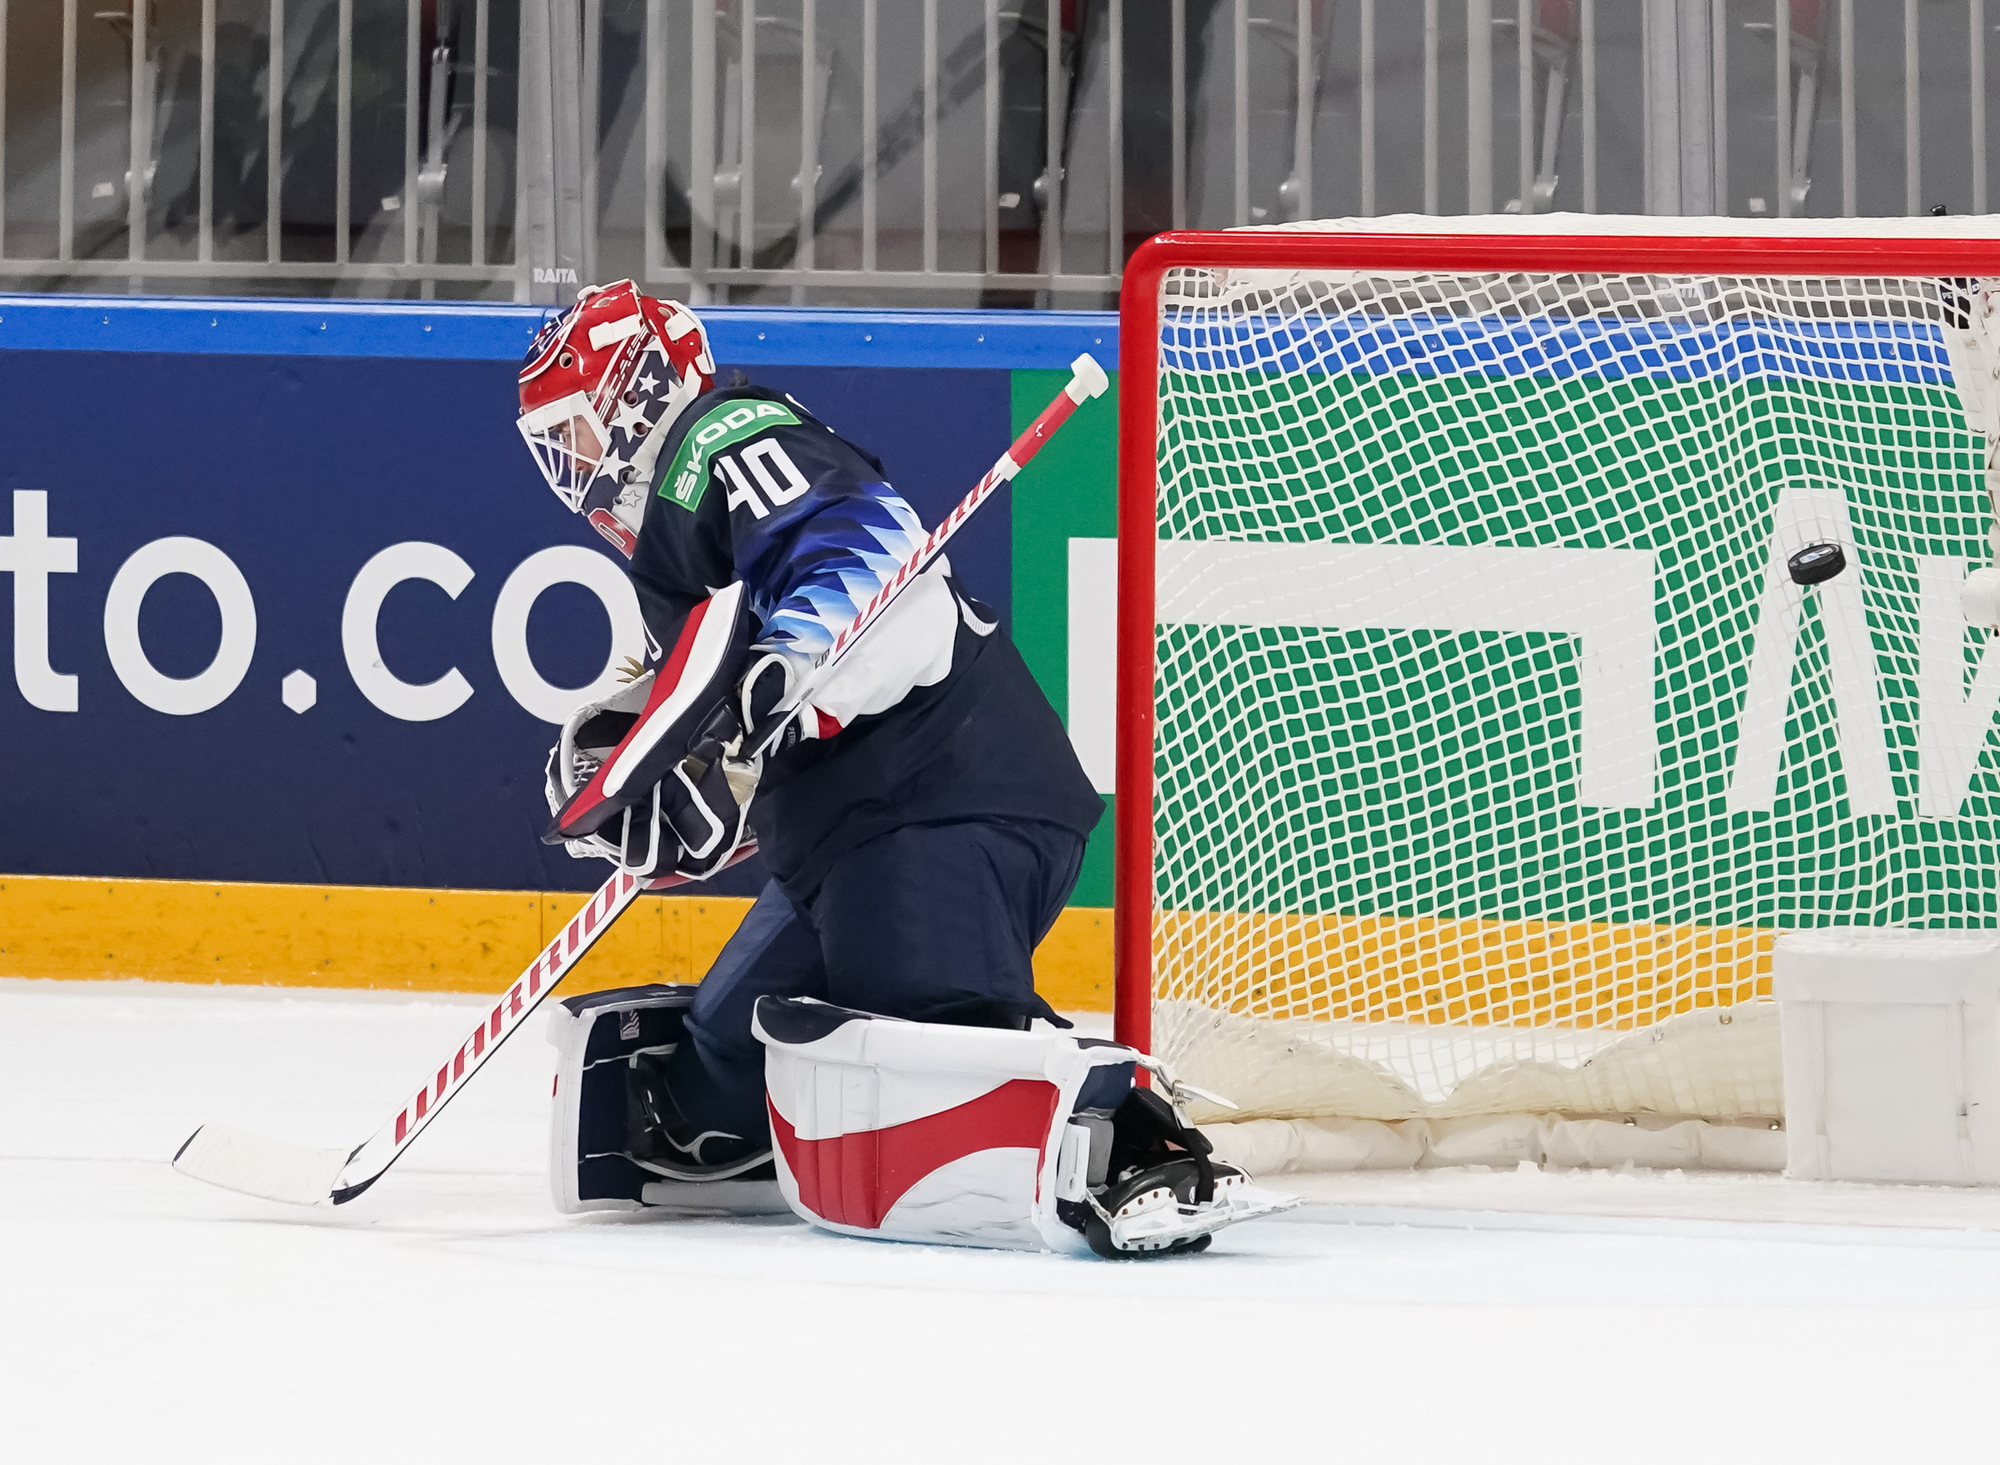 IIHF U.S. tops Slovakia to make semifinals